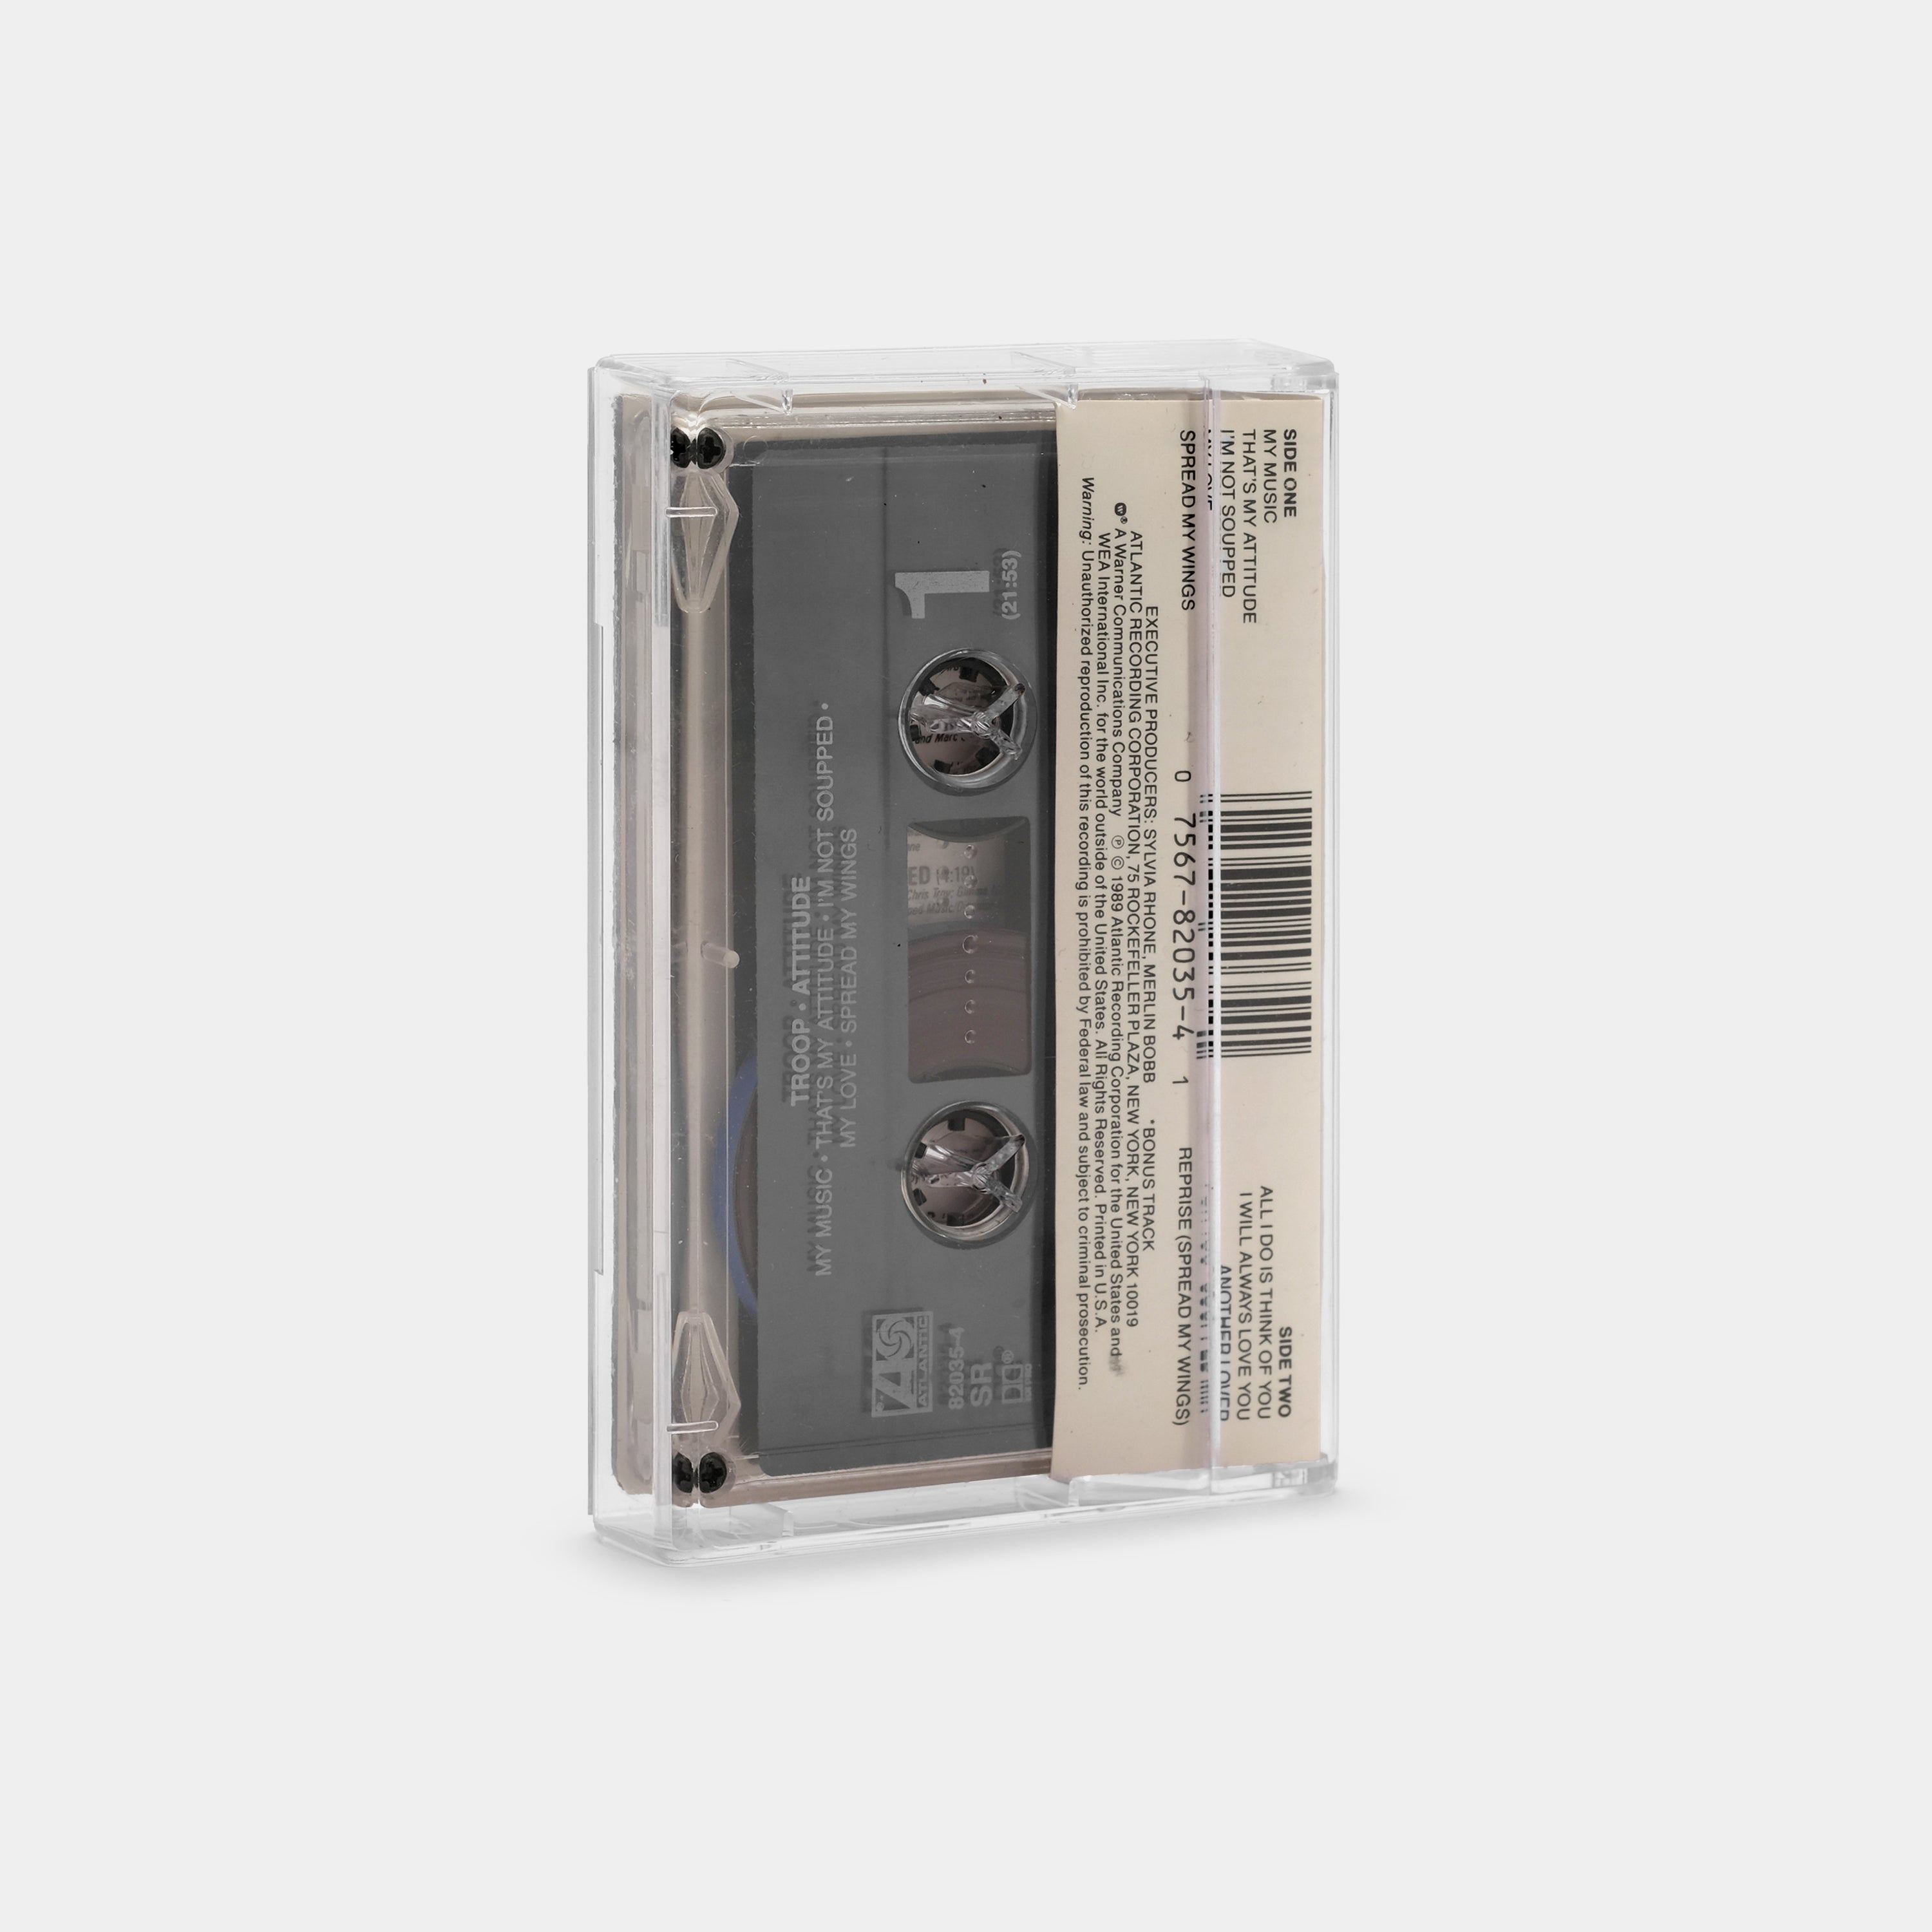 Troop - Attitude Cassette Tape